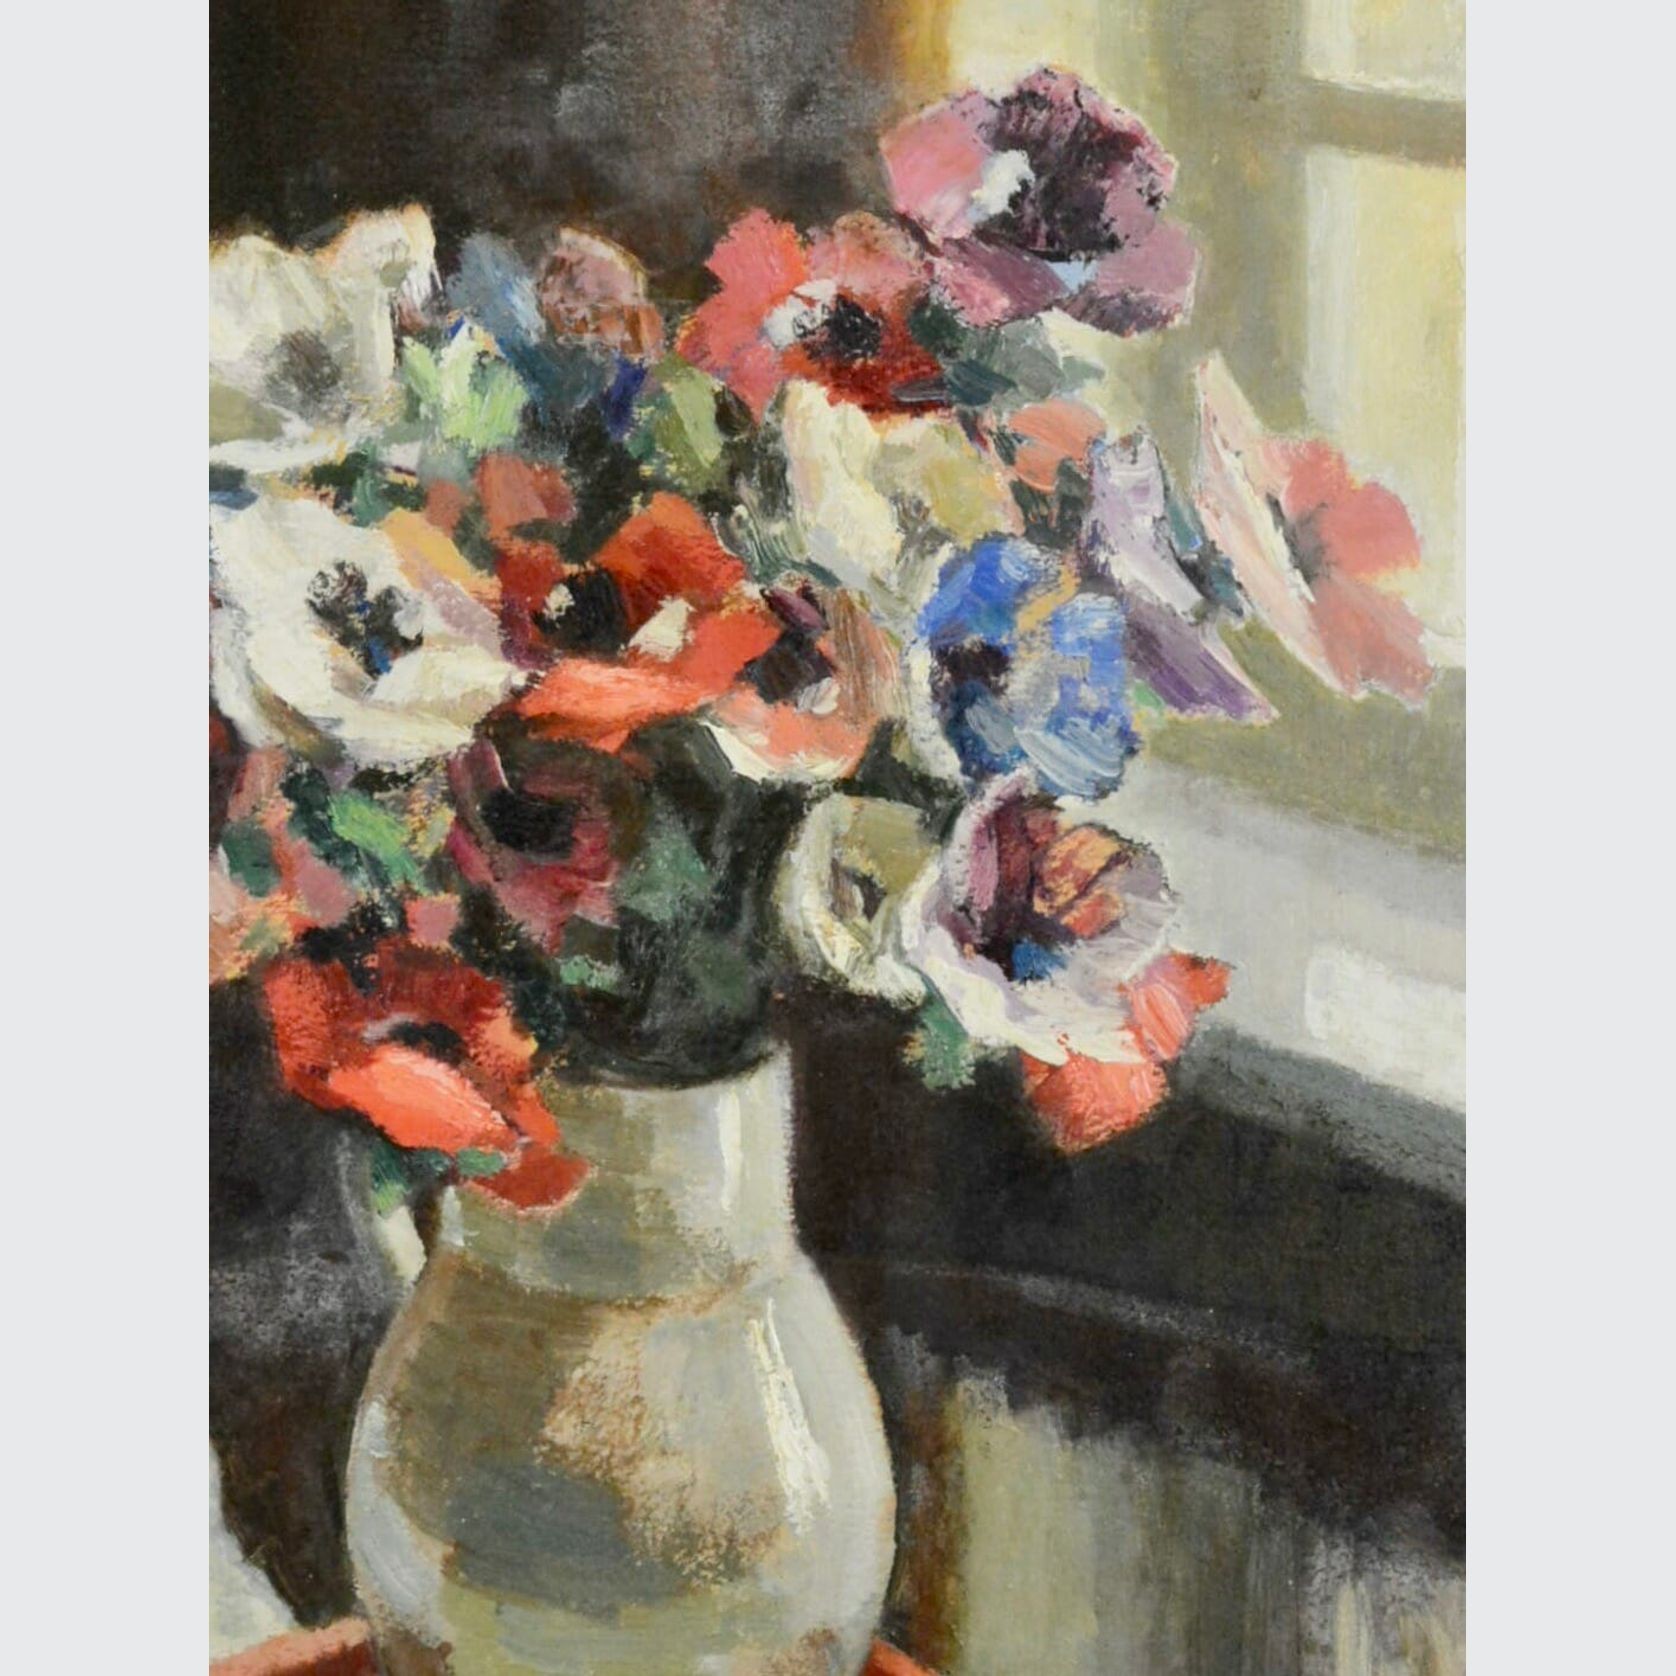 Oil on Canvas "Vase of Flowers" by George Bierand, 1928 gallery detail image